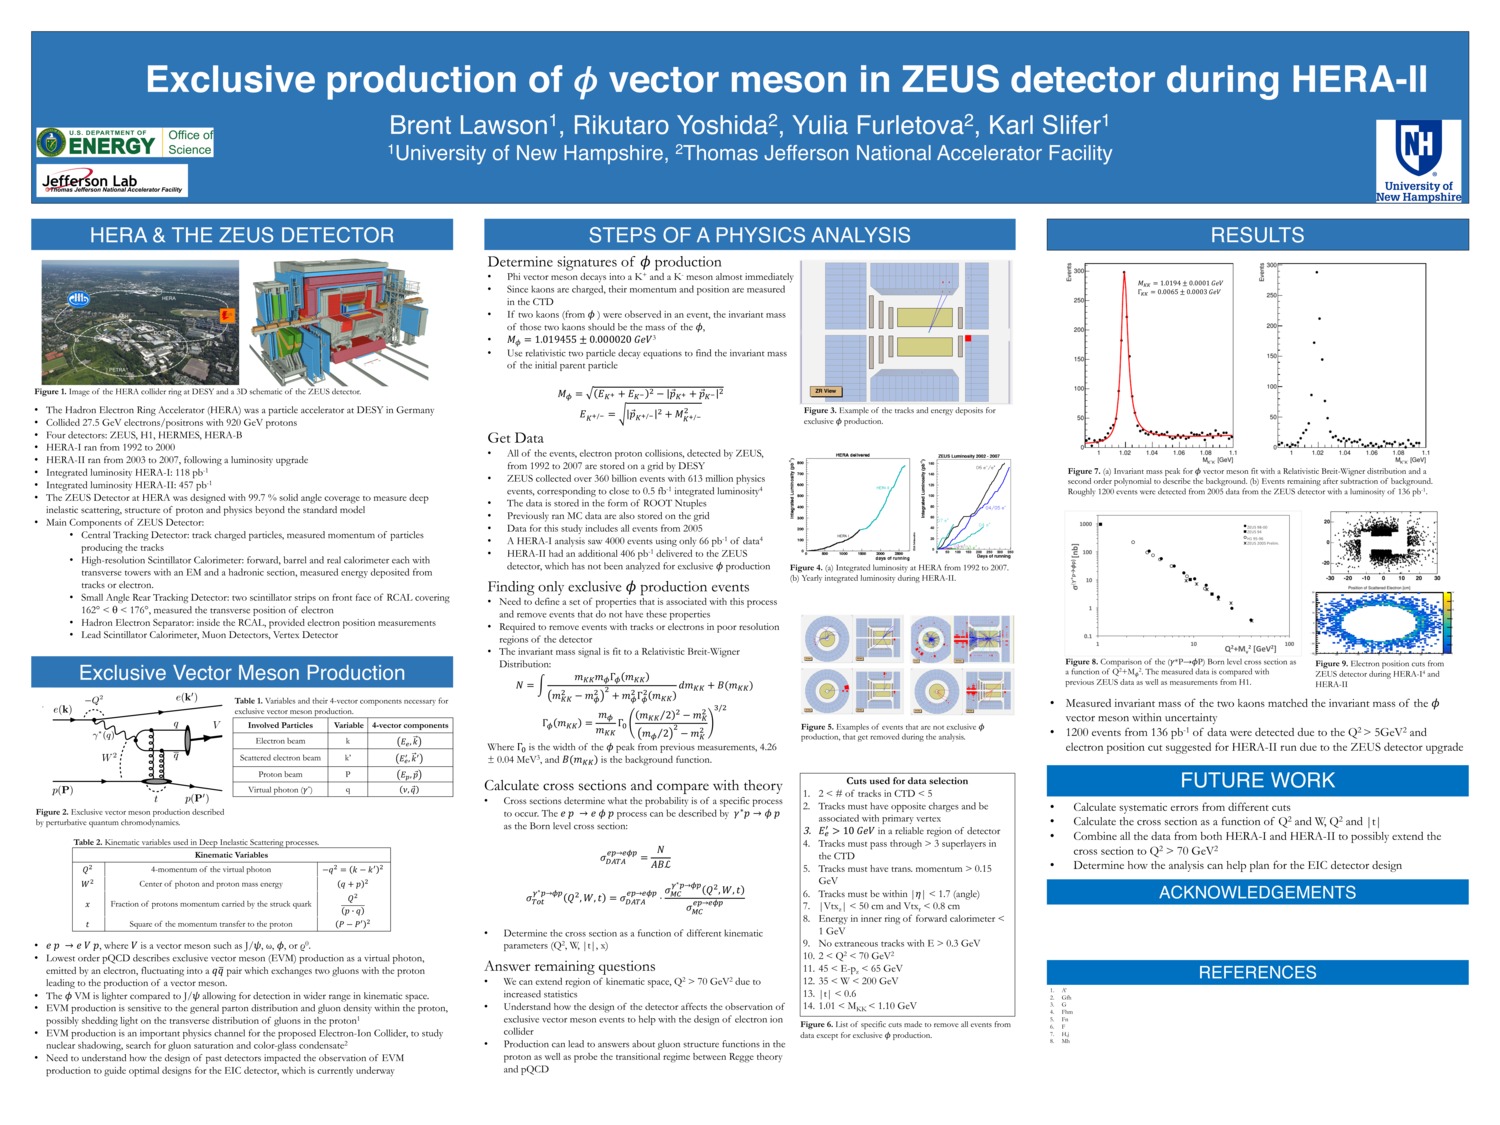 Exclusive Production Of 𝜙 Vector Meson In Zeus Detector During Hera-Ii by bnl2000